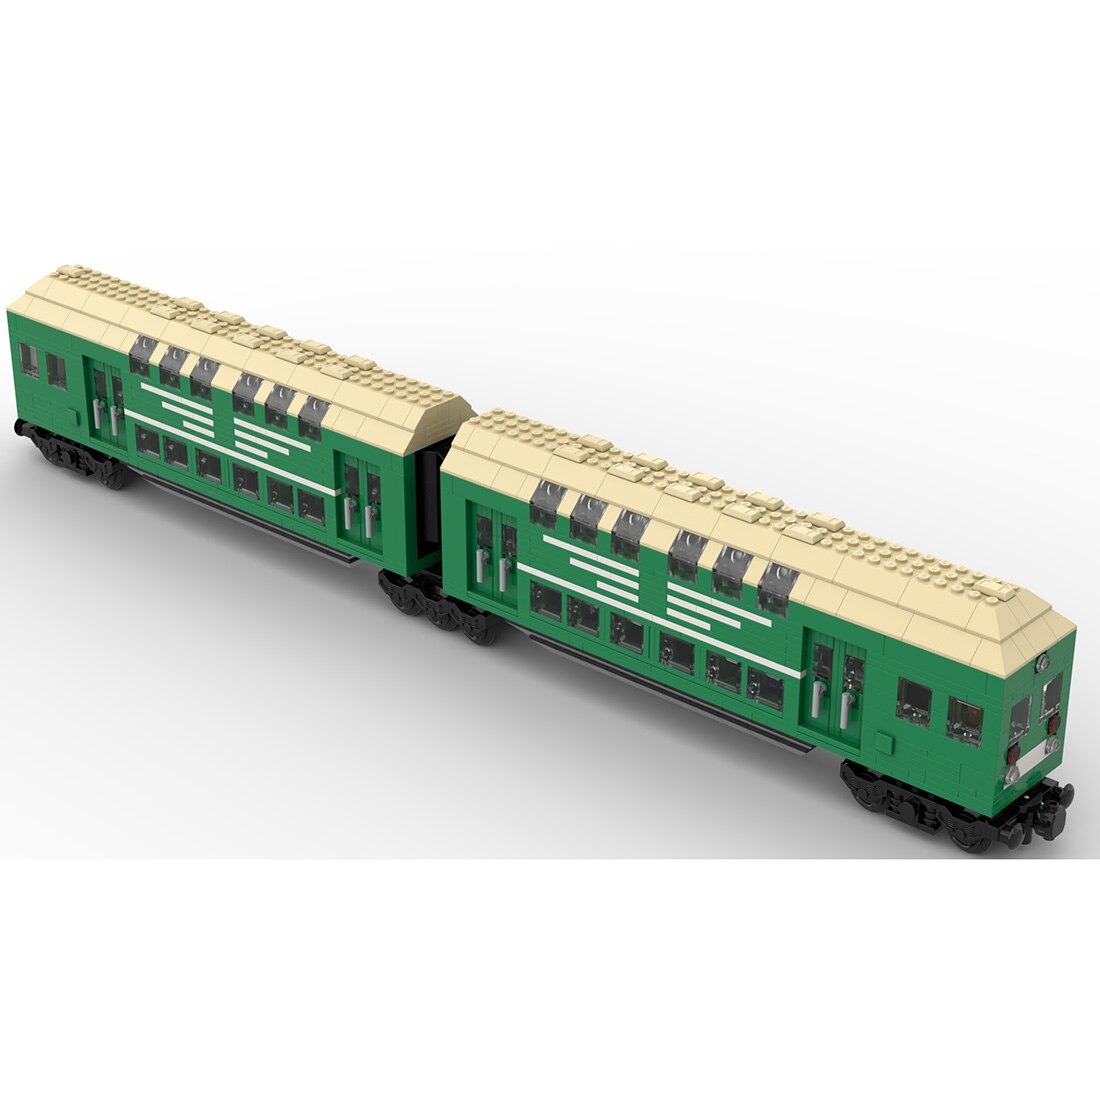 authorized moc 109281 7 axle train carri main 4 - CADA Block